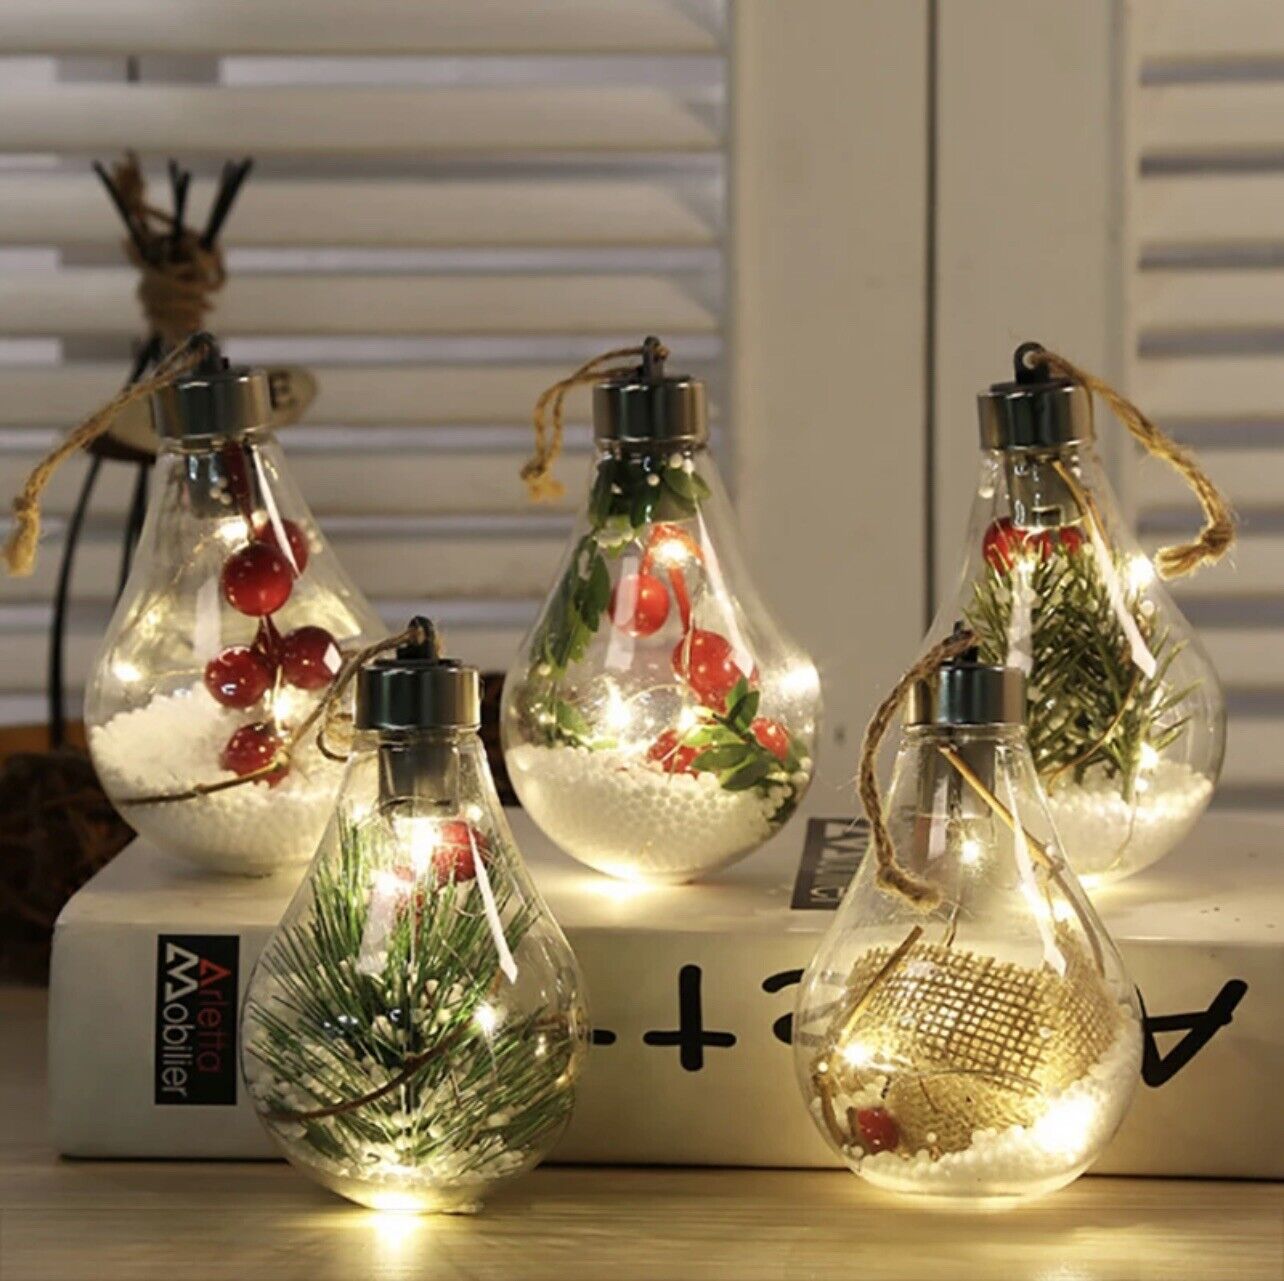 Set of 5 LED Christmas Light Bulbs Ornaments Decor With Snow & Holiday Plants